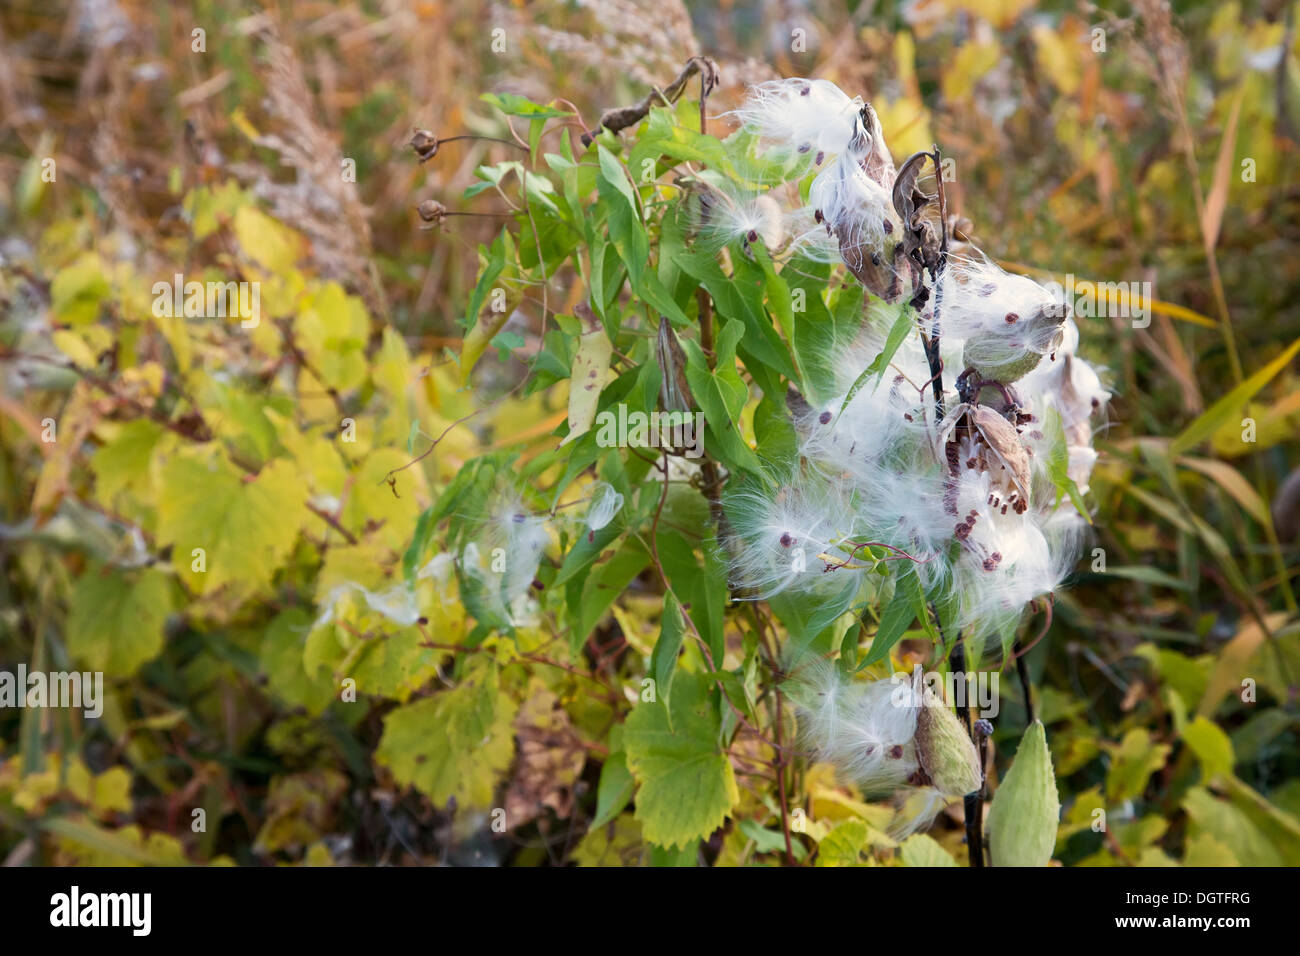 Detroit, Michigan - Milkweed seed pods on Belle Isle, a Detroit city park. Stock Photo